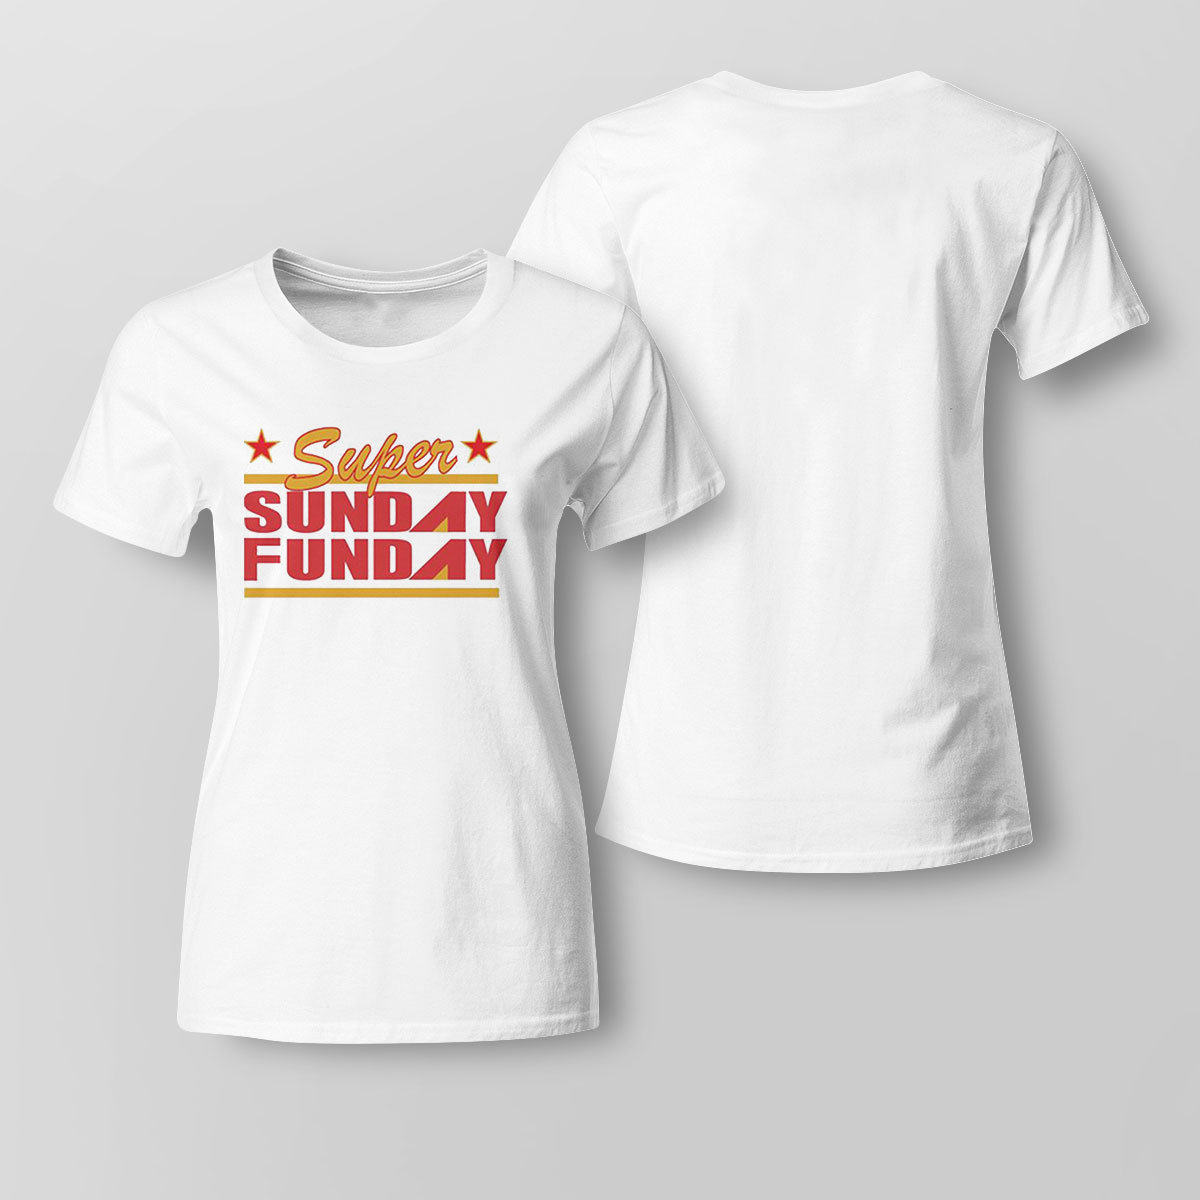 Kansas City Chiefs Super Bowl Lvii Sunday Funday Shirt Ladies T-shirt